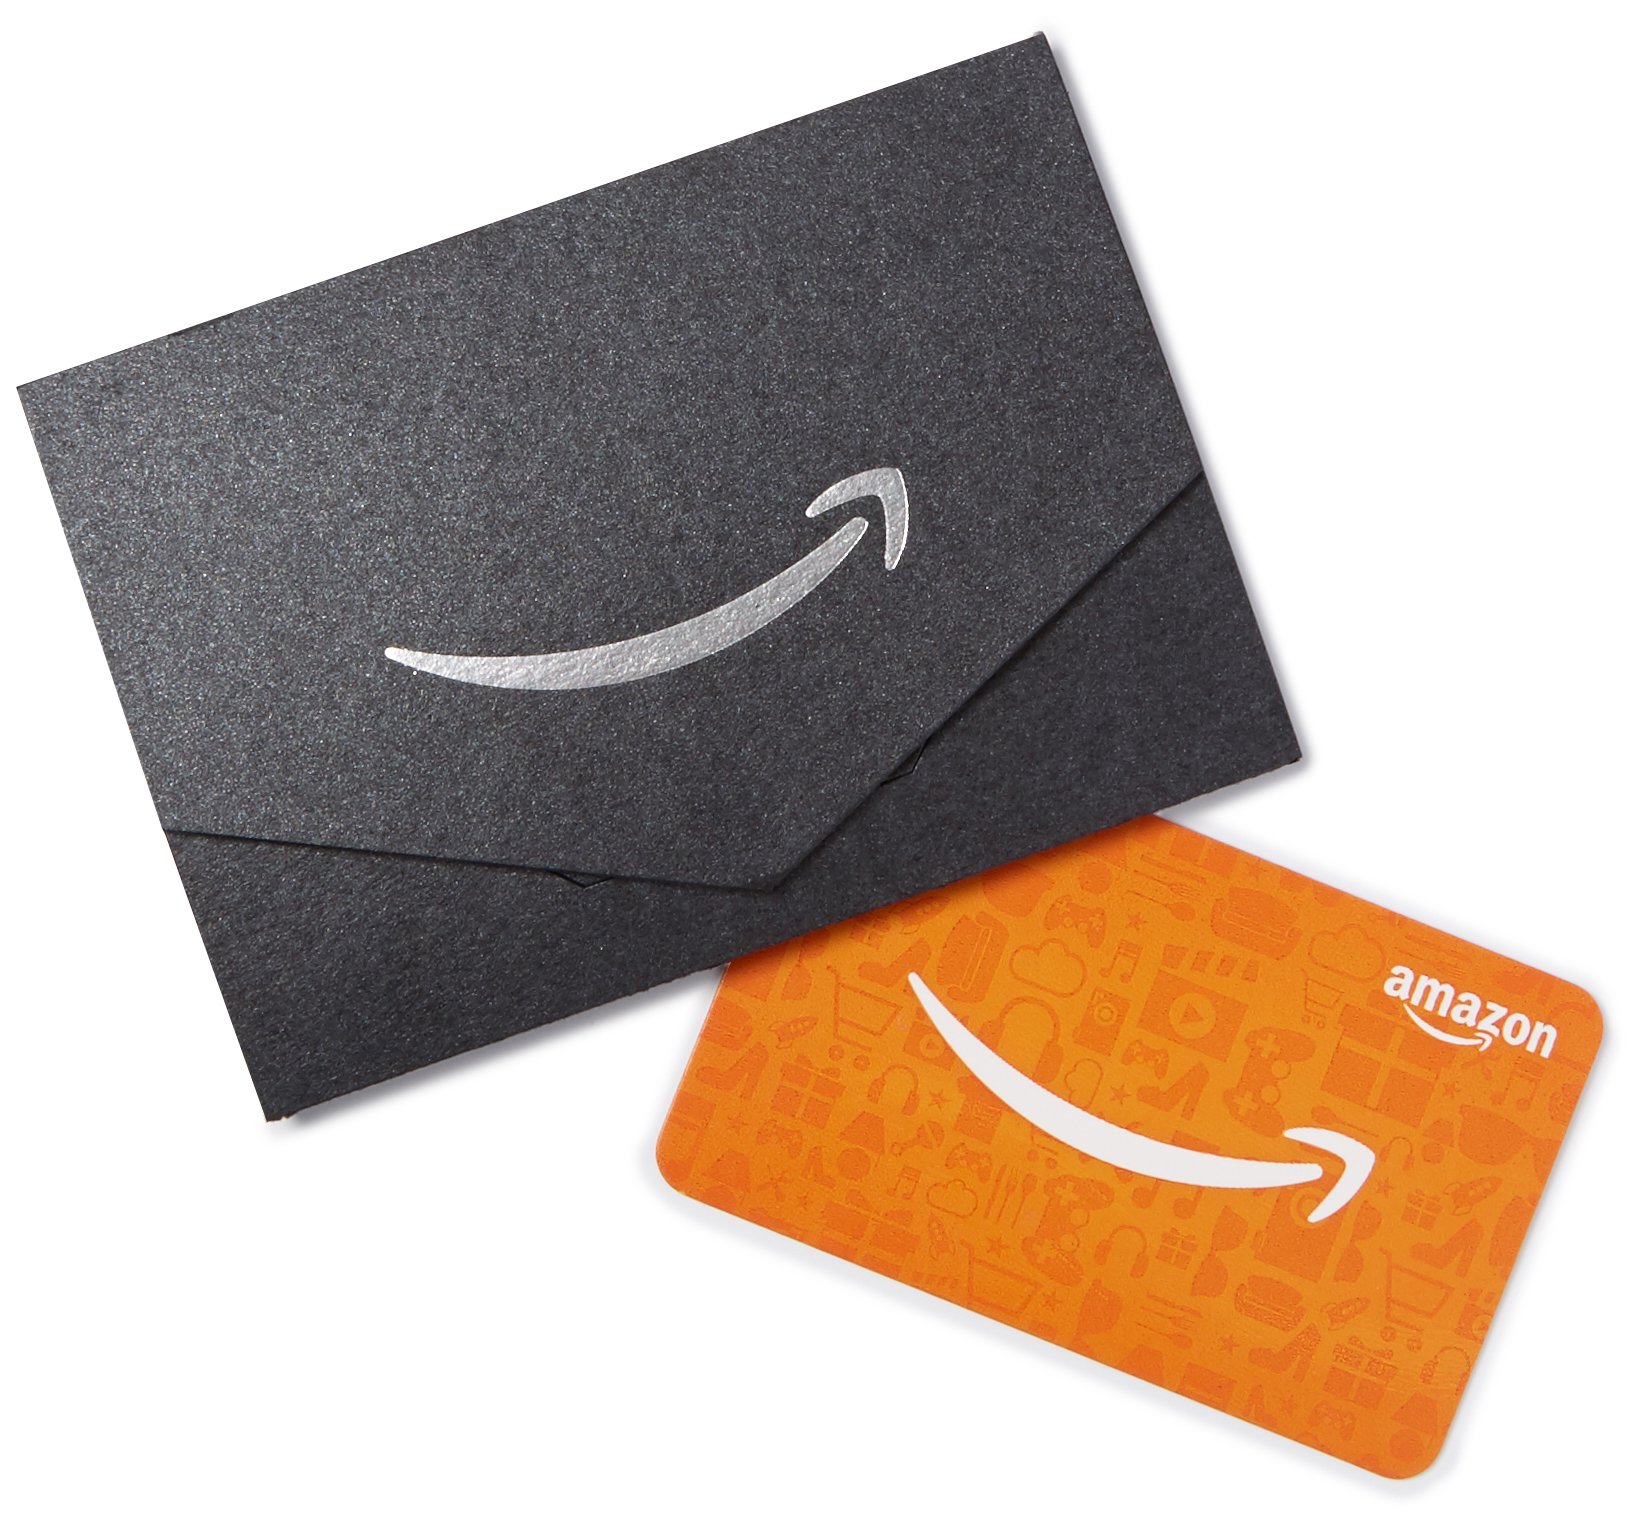 Book Cover Amazon.com Gift Card in a Mini Envelope 0 Black and Silver Mini Envelope